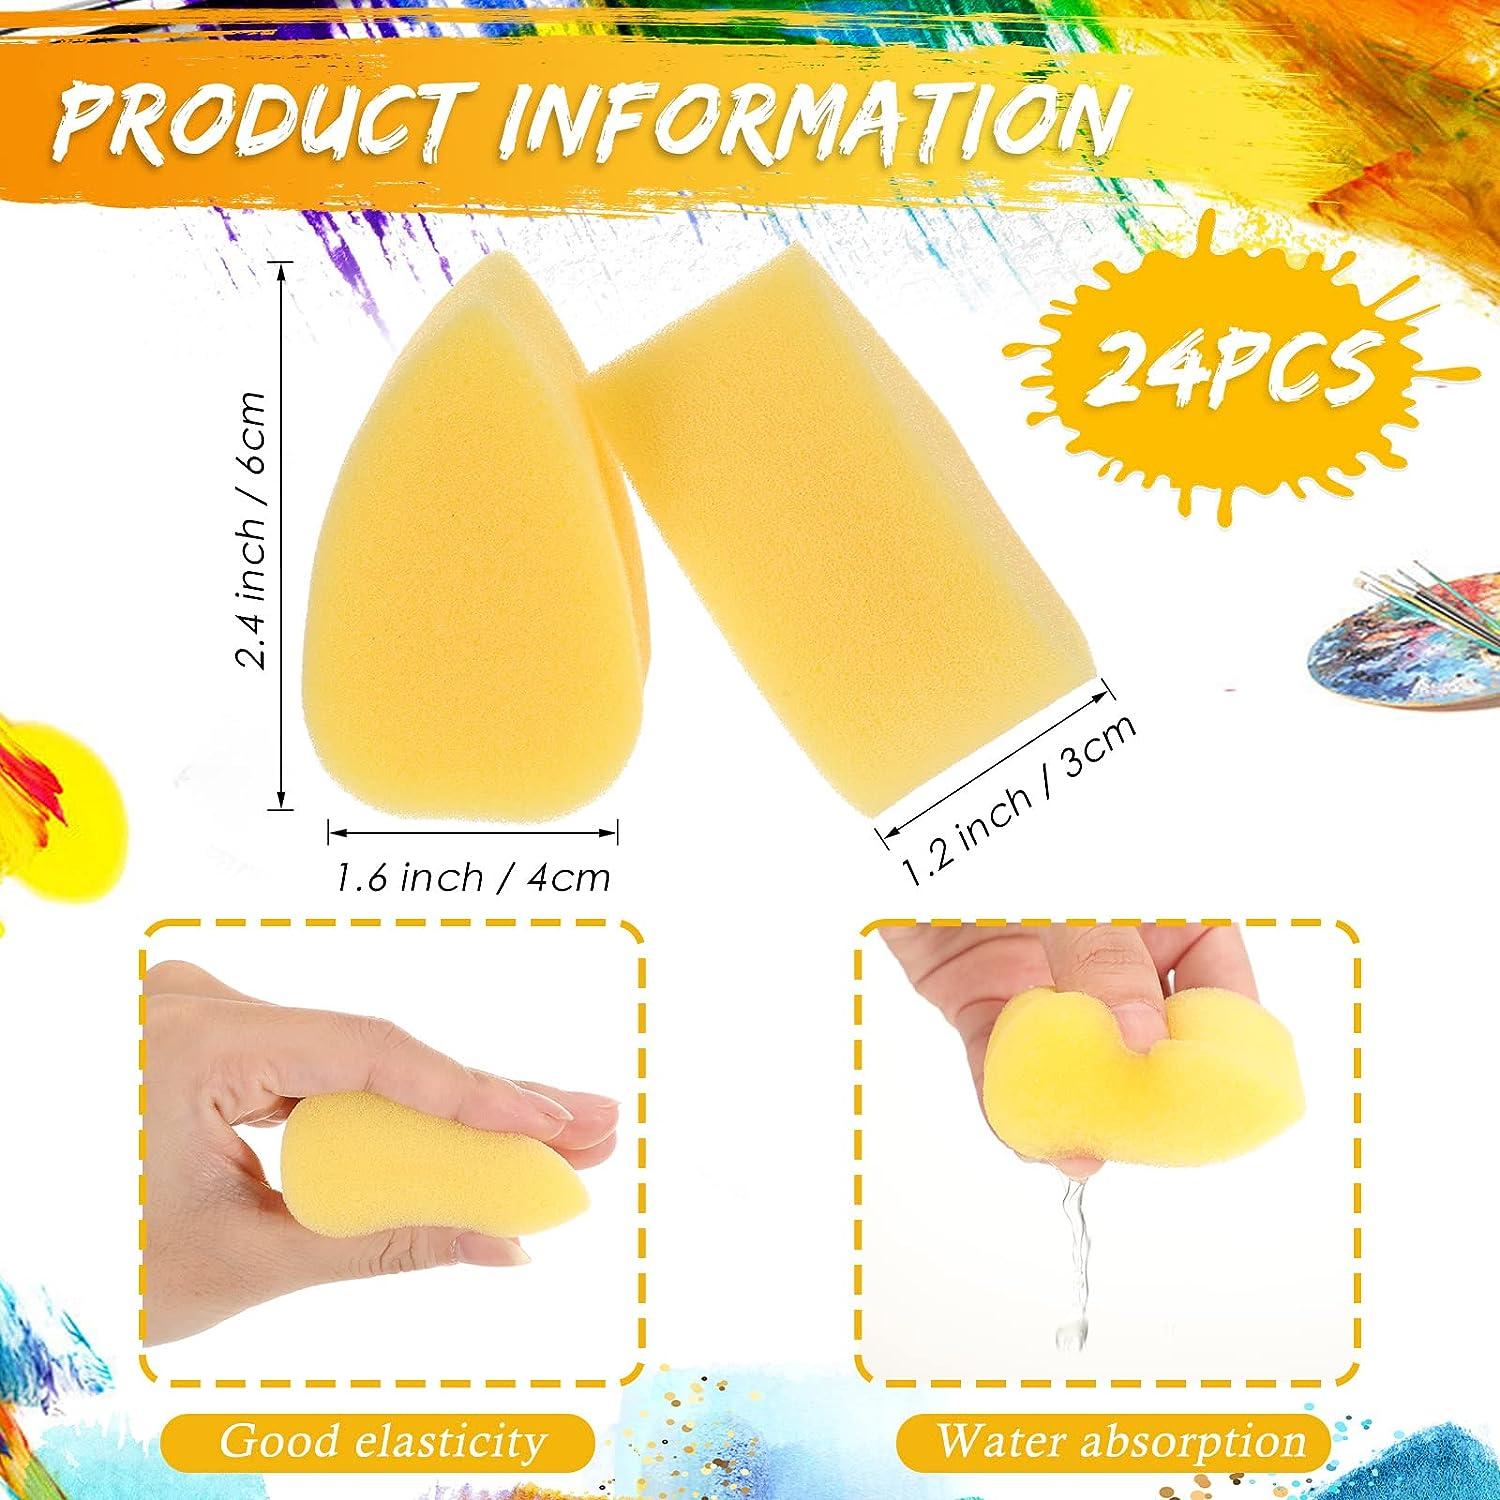 Face Paint High Density Sponges - pack of 4 - Art & Craft